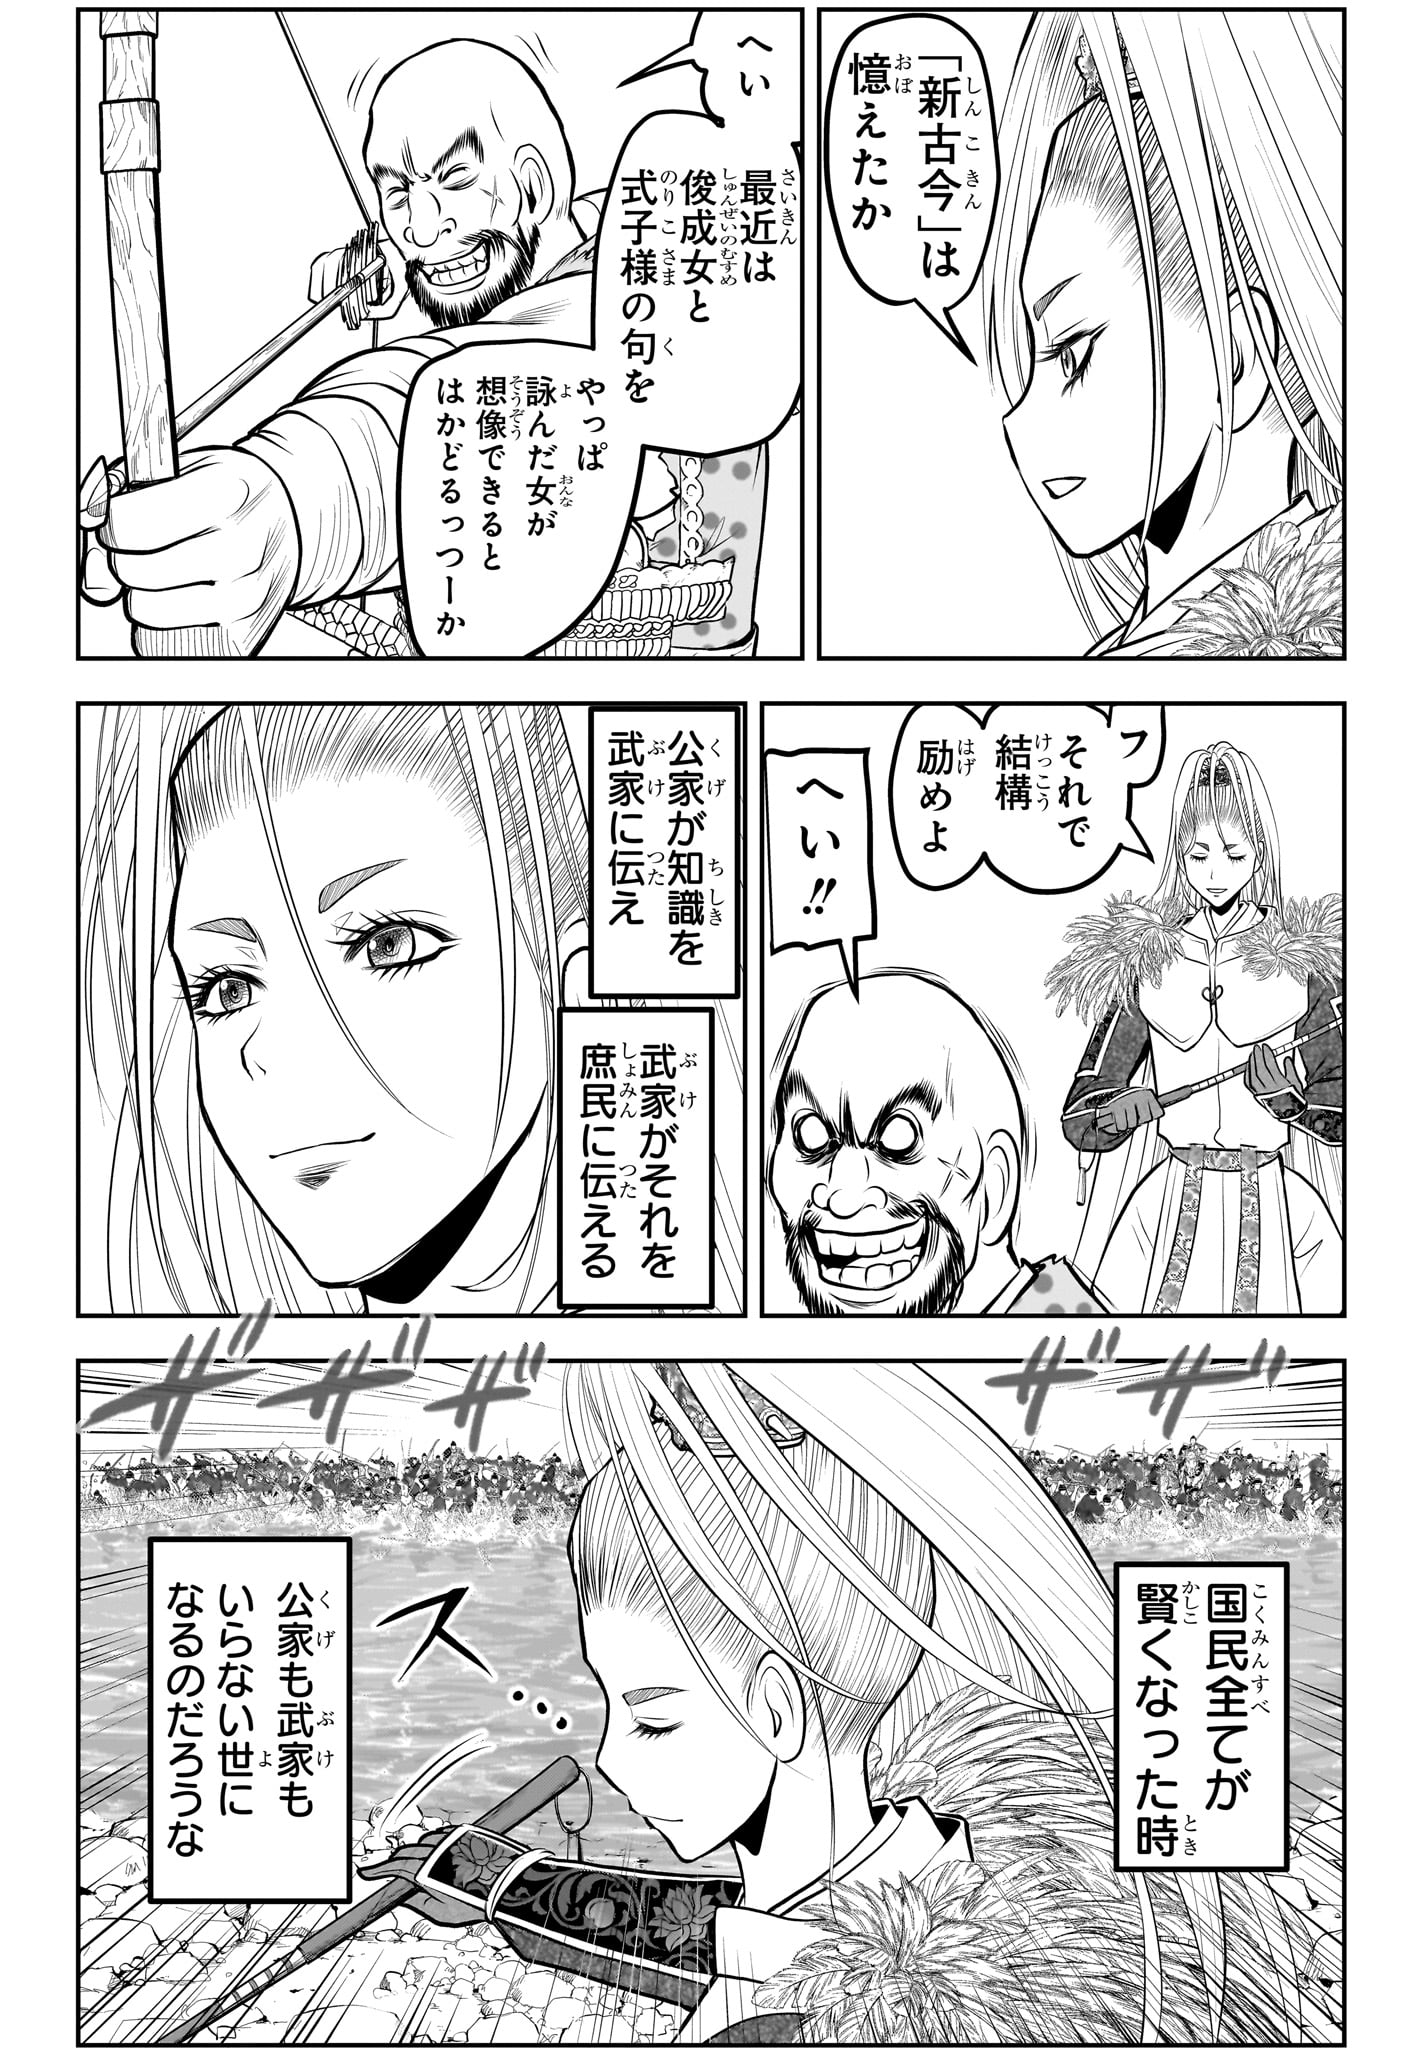 Nige Jouzu no Wakagimi - Chapter 157 - Page 2